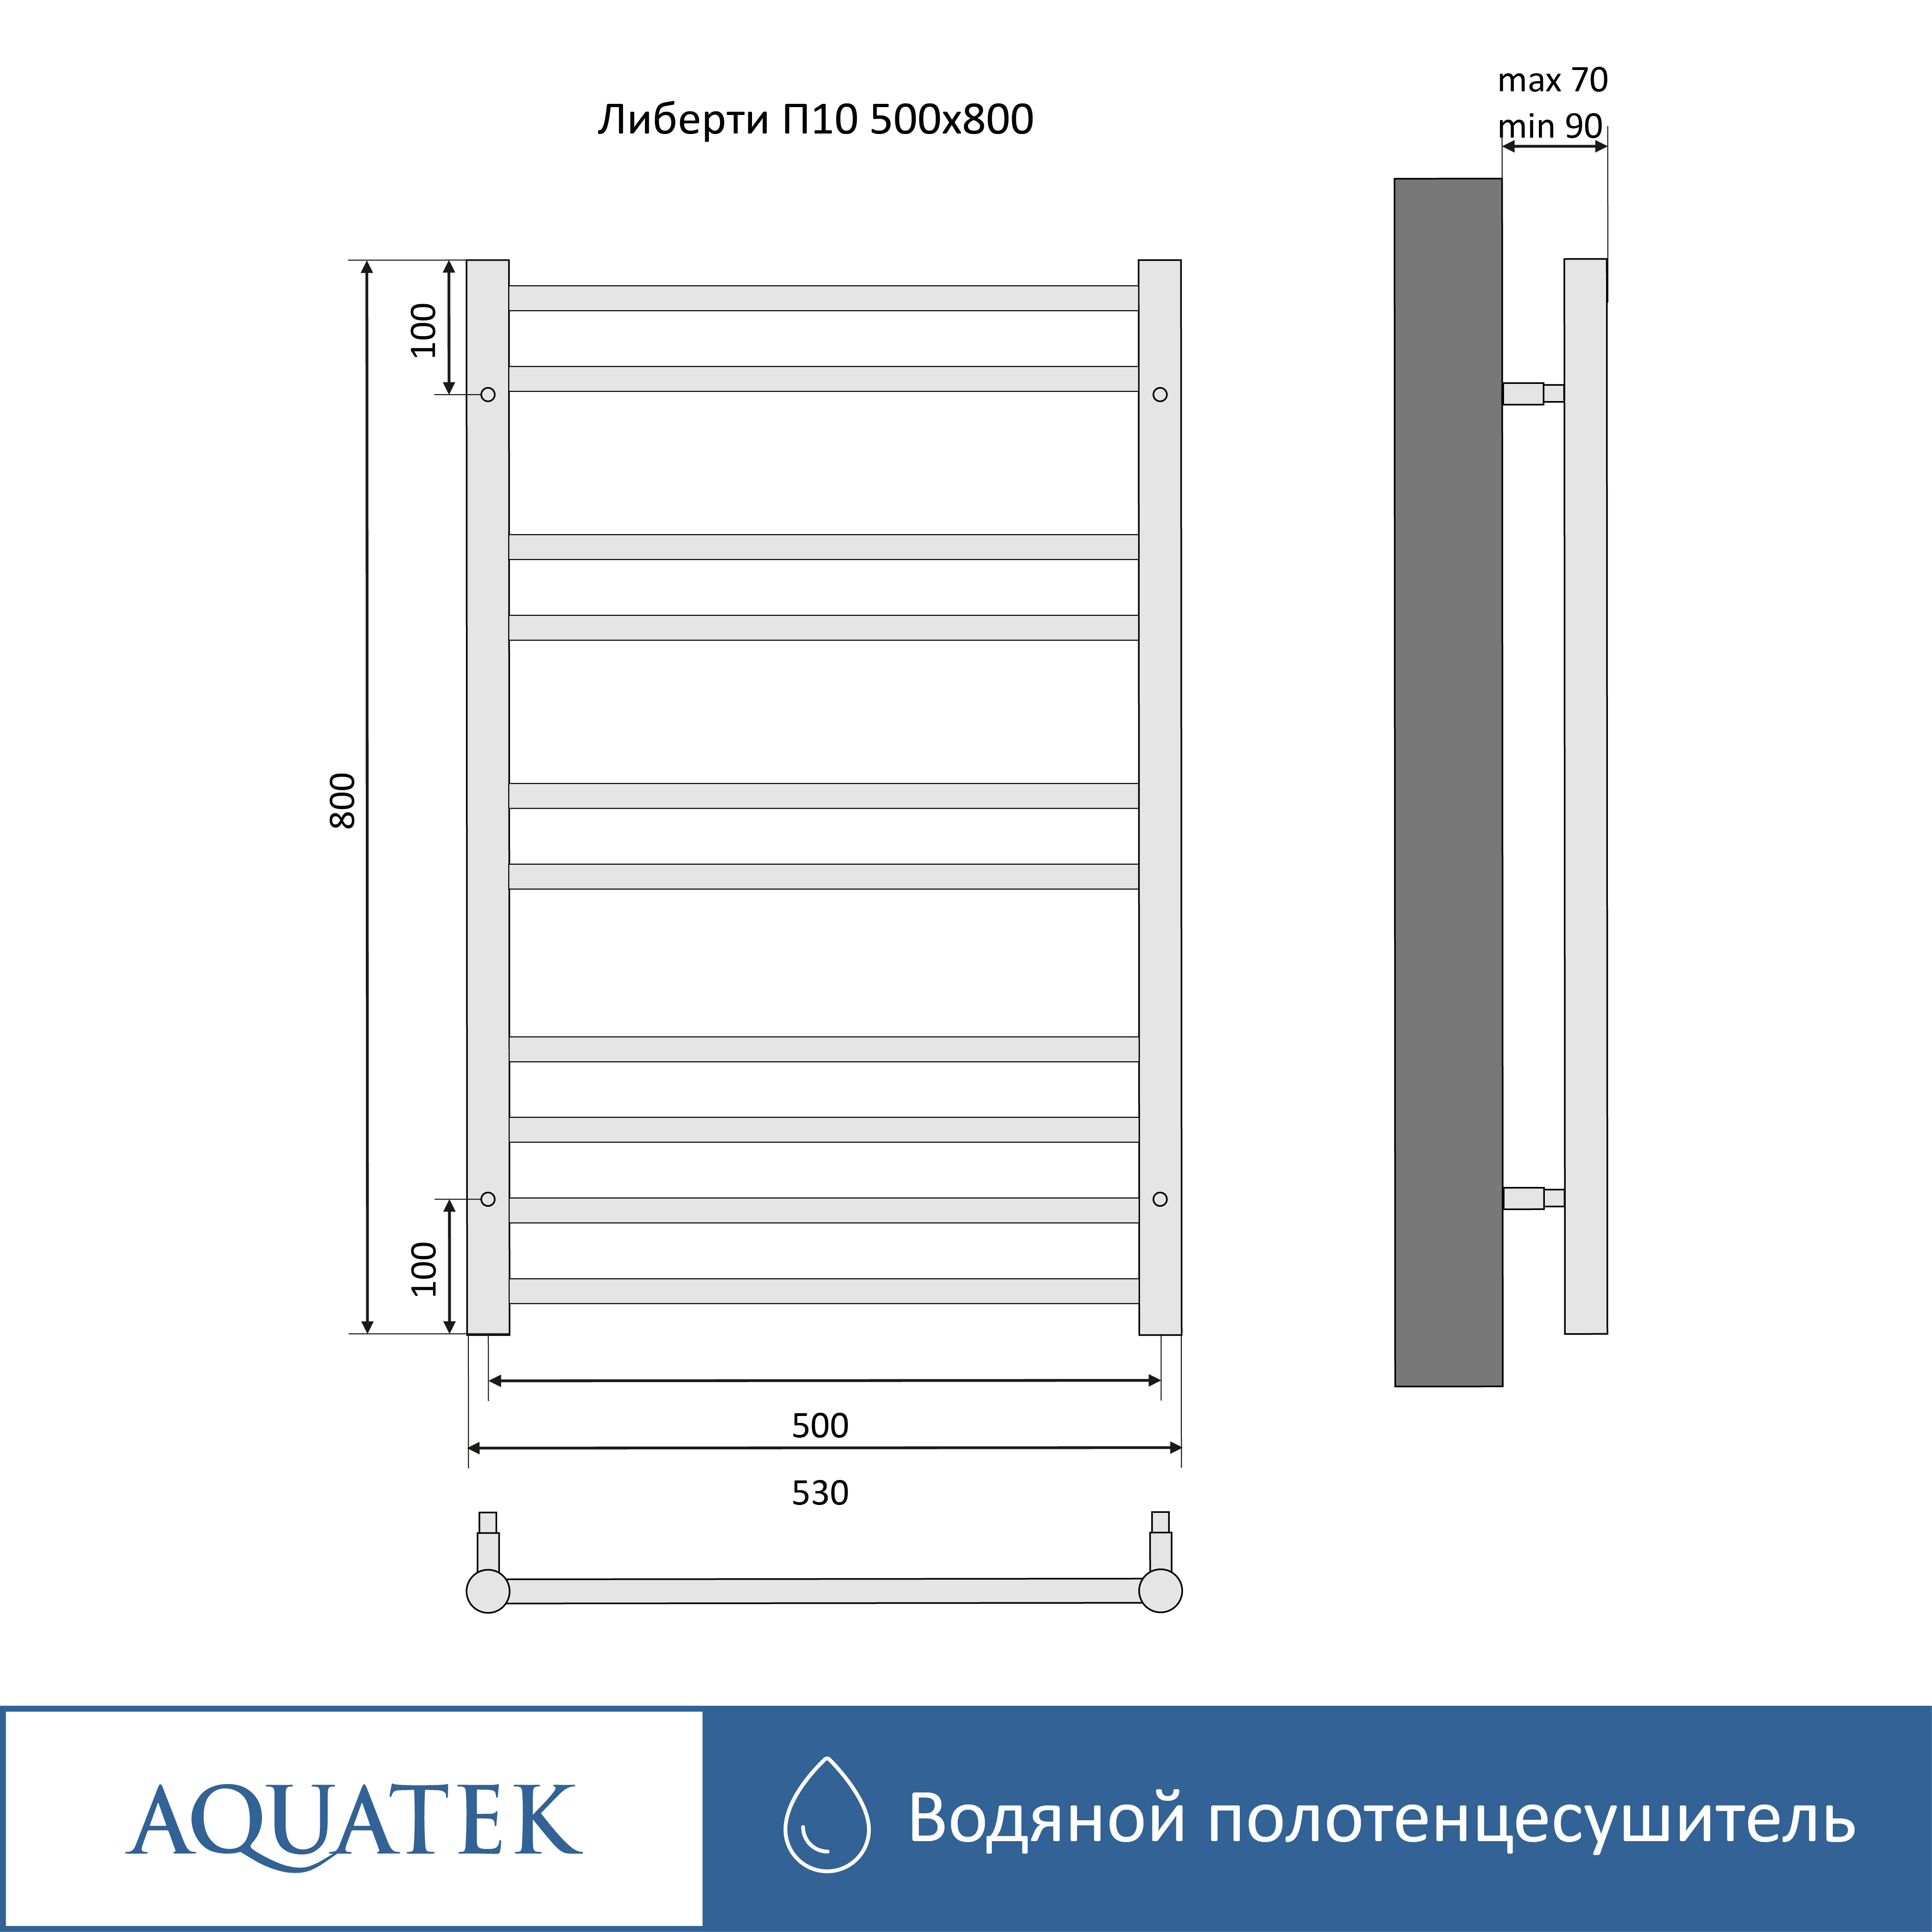 Полотенцесушитель водяной Aquatek Либерти П10 500х800 AQ RR1080CH - 14